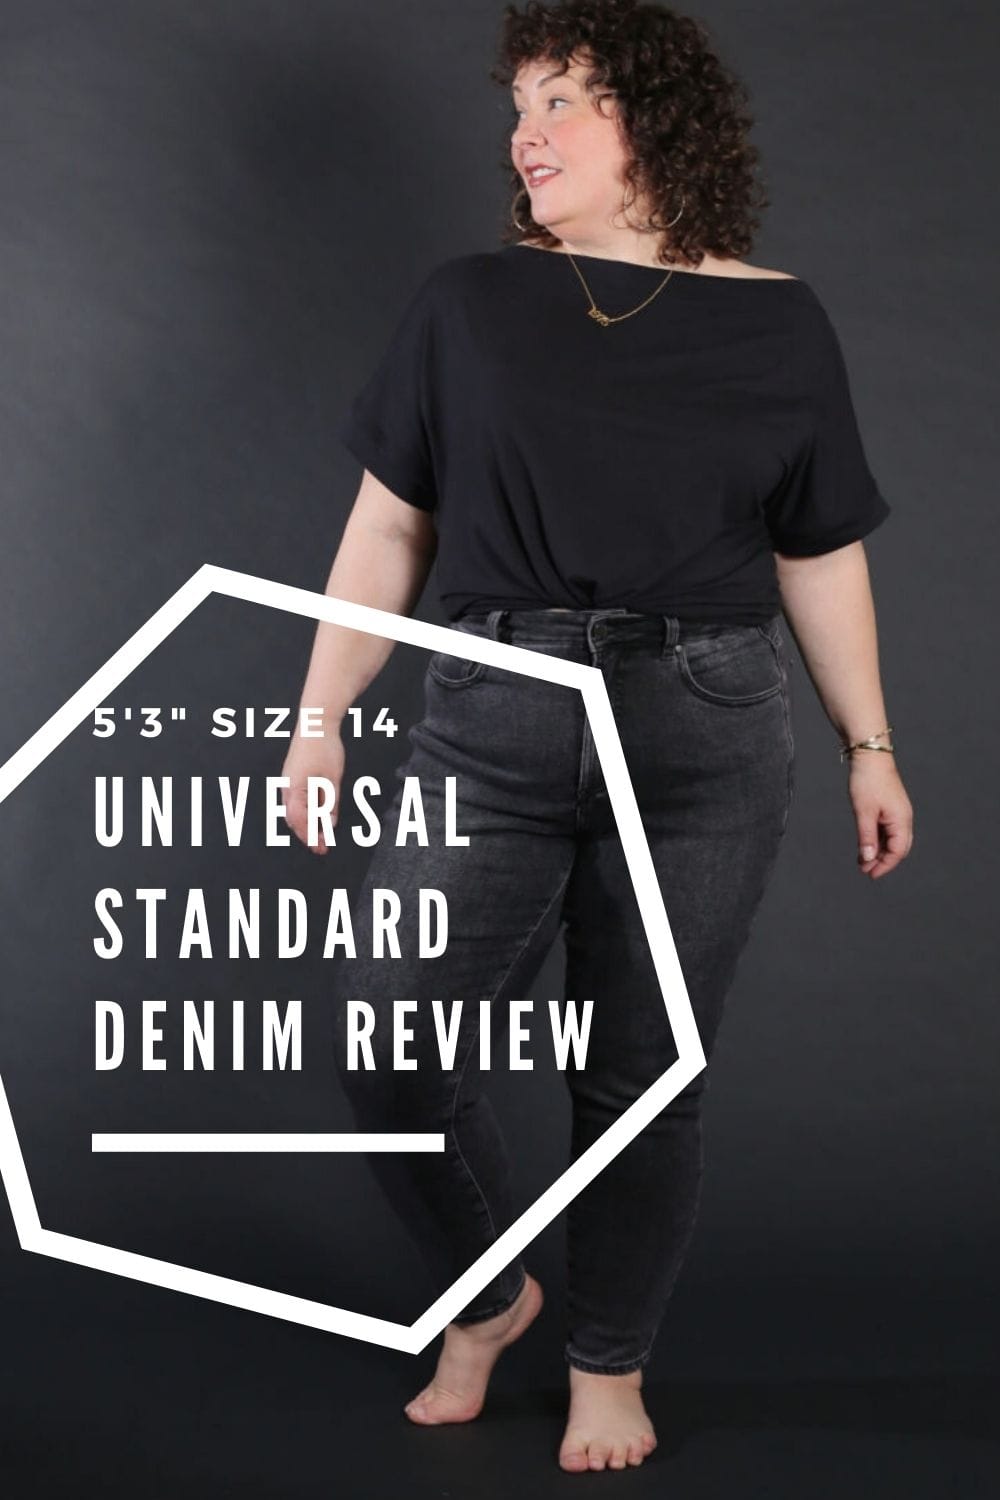 New Universal Standard Denim Review